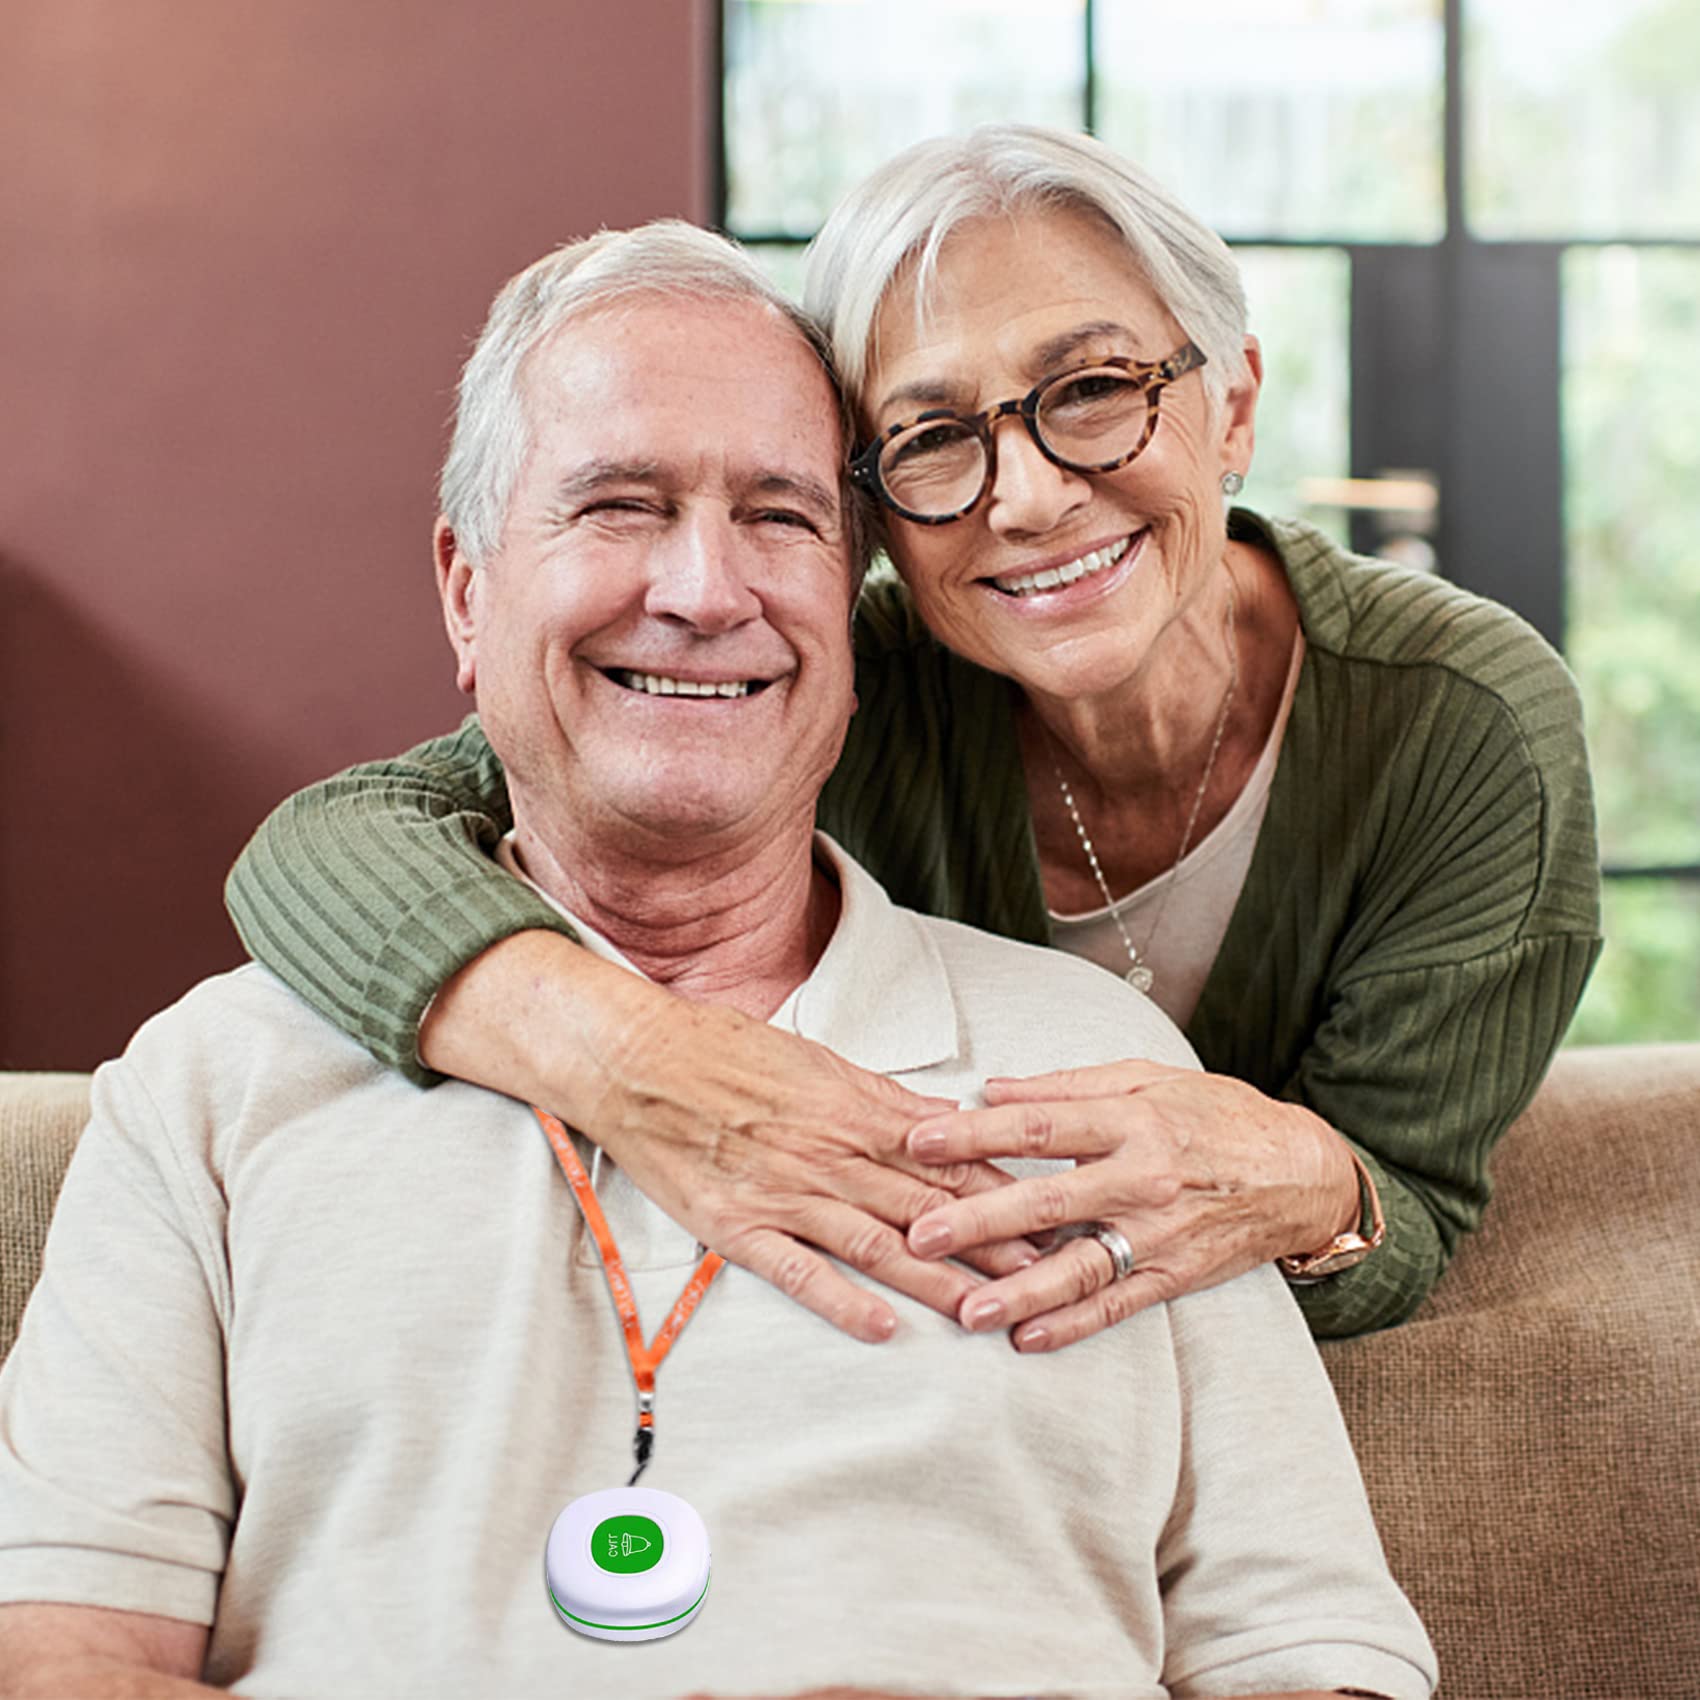 Daytech CC02 Caregiver Pager for Seniors 3 Portable Receivers + 2 Caregiver Call Buttons